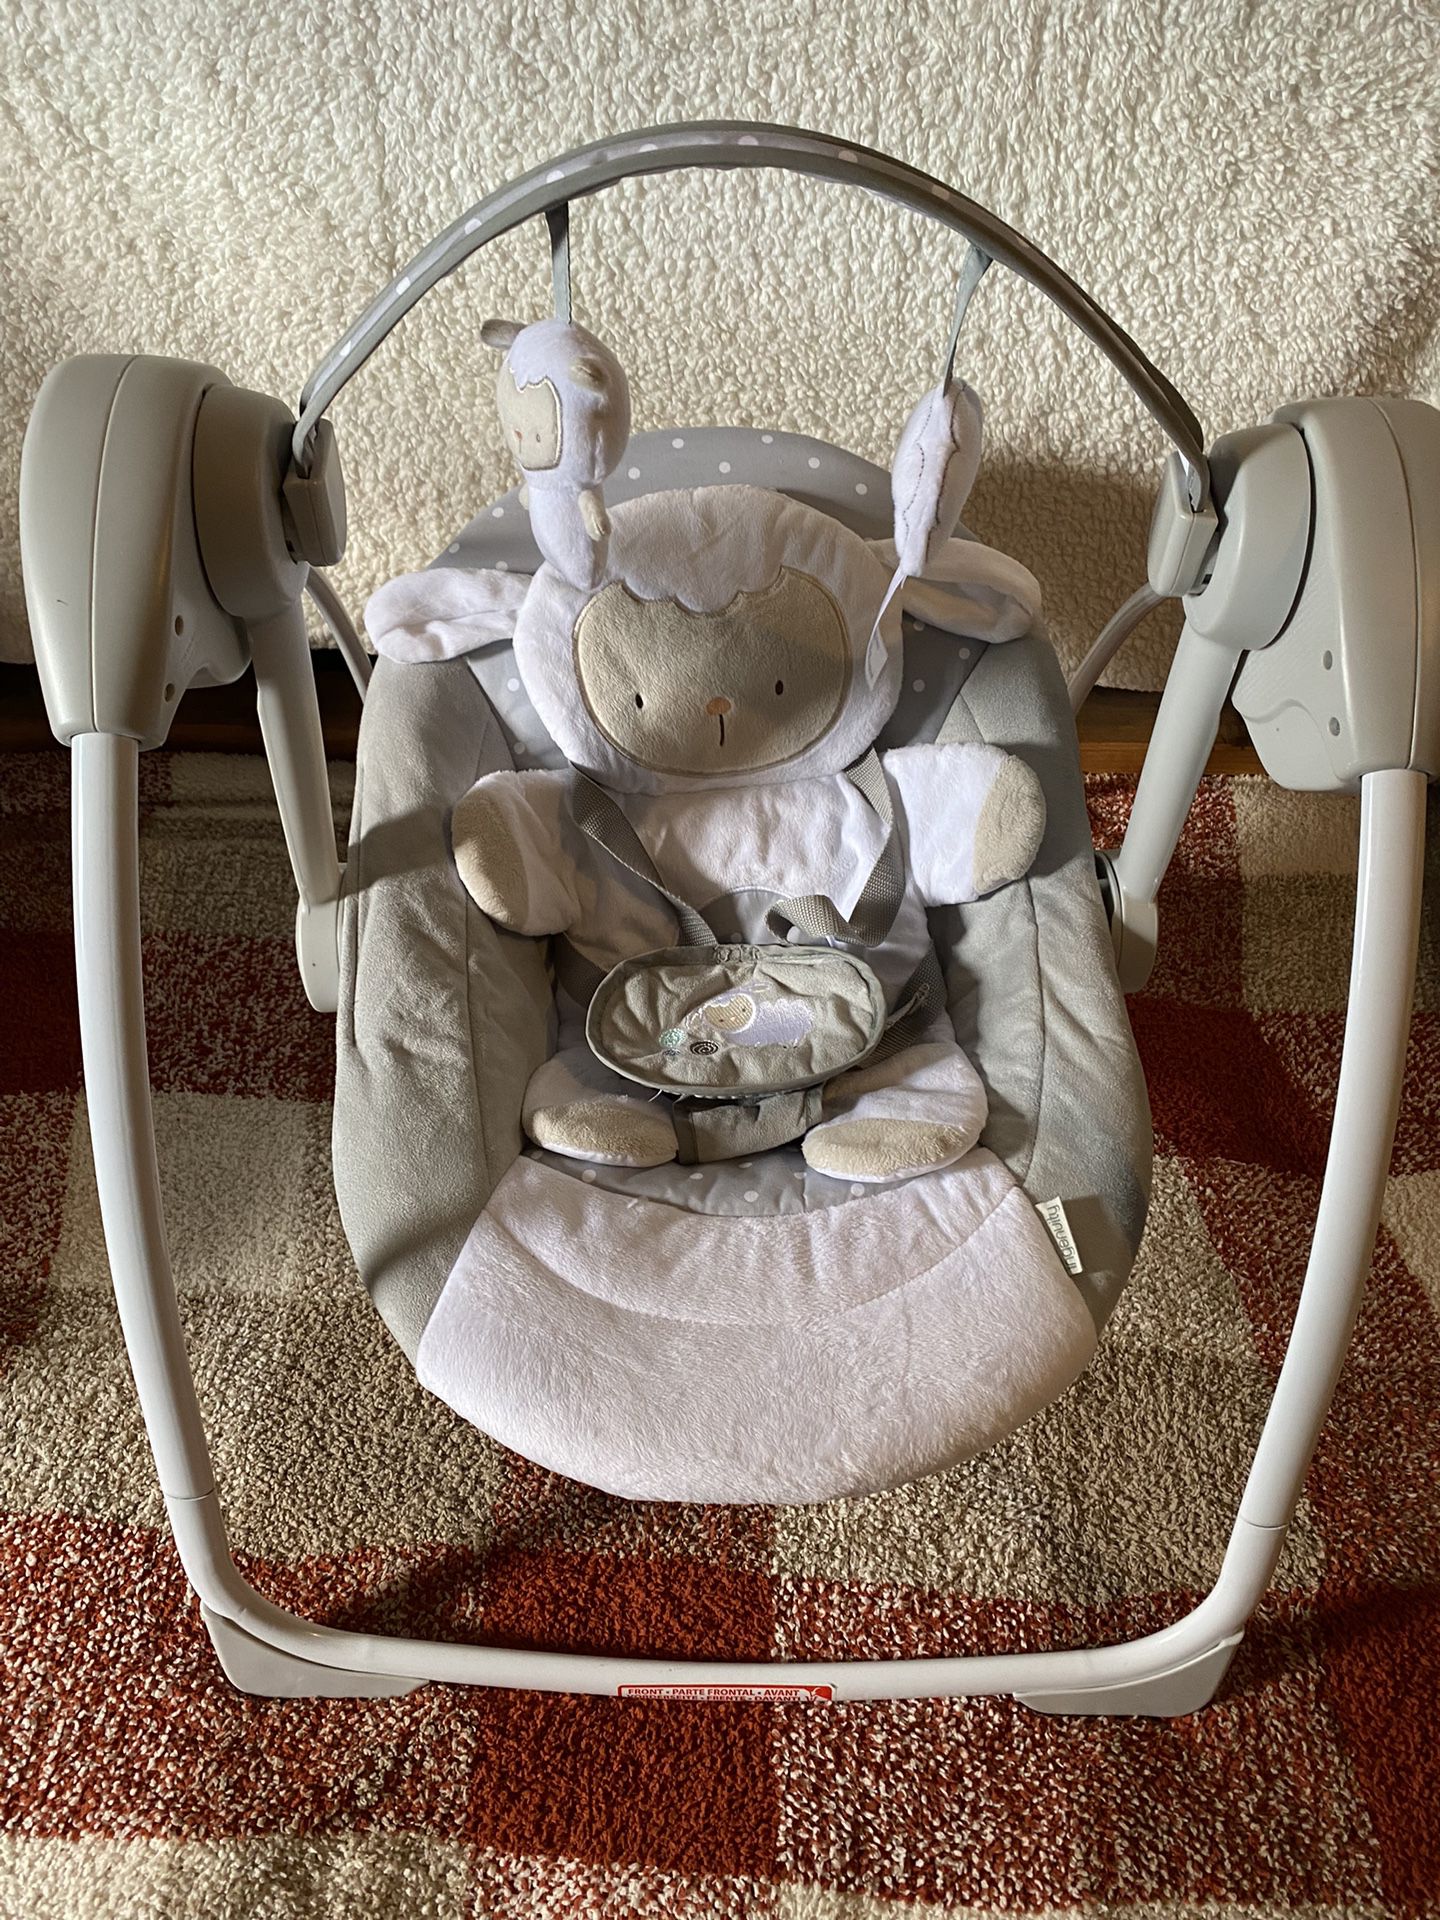 Ingenuity Portable Baby Swing 